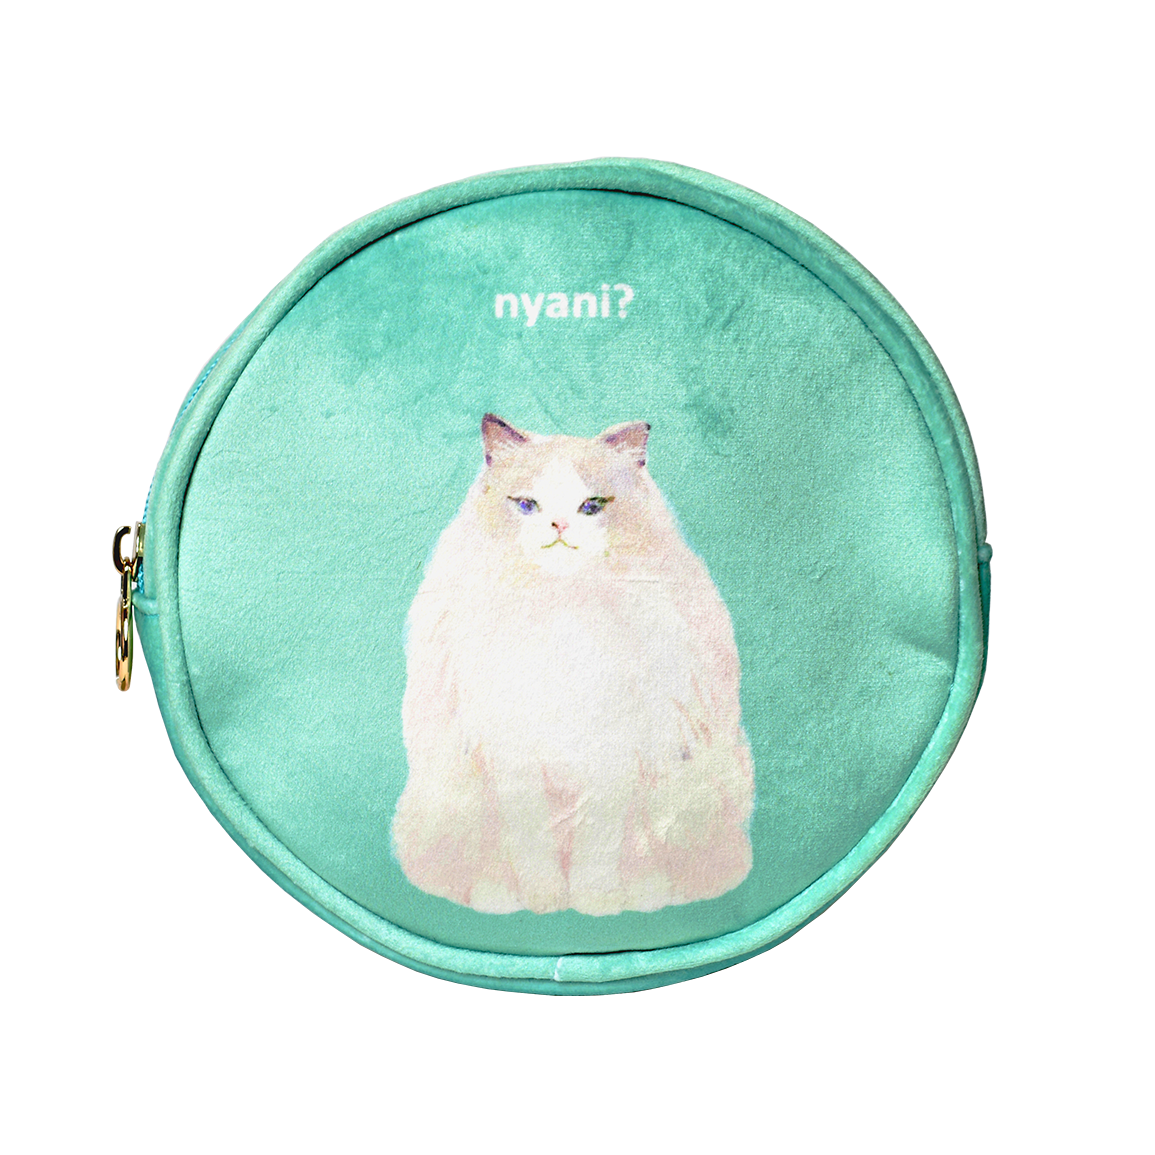 Friendshill nyani? 布偶貓熱情巴黎綠色圓形收納包